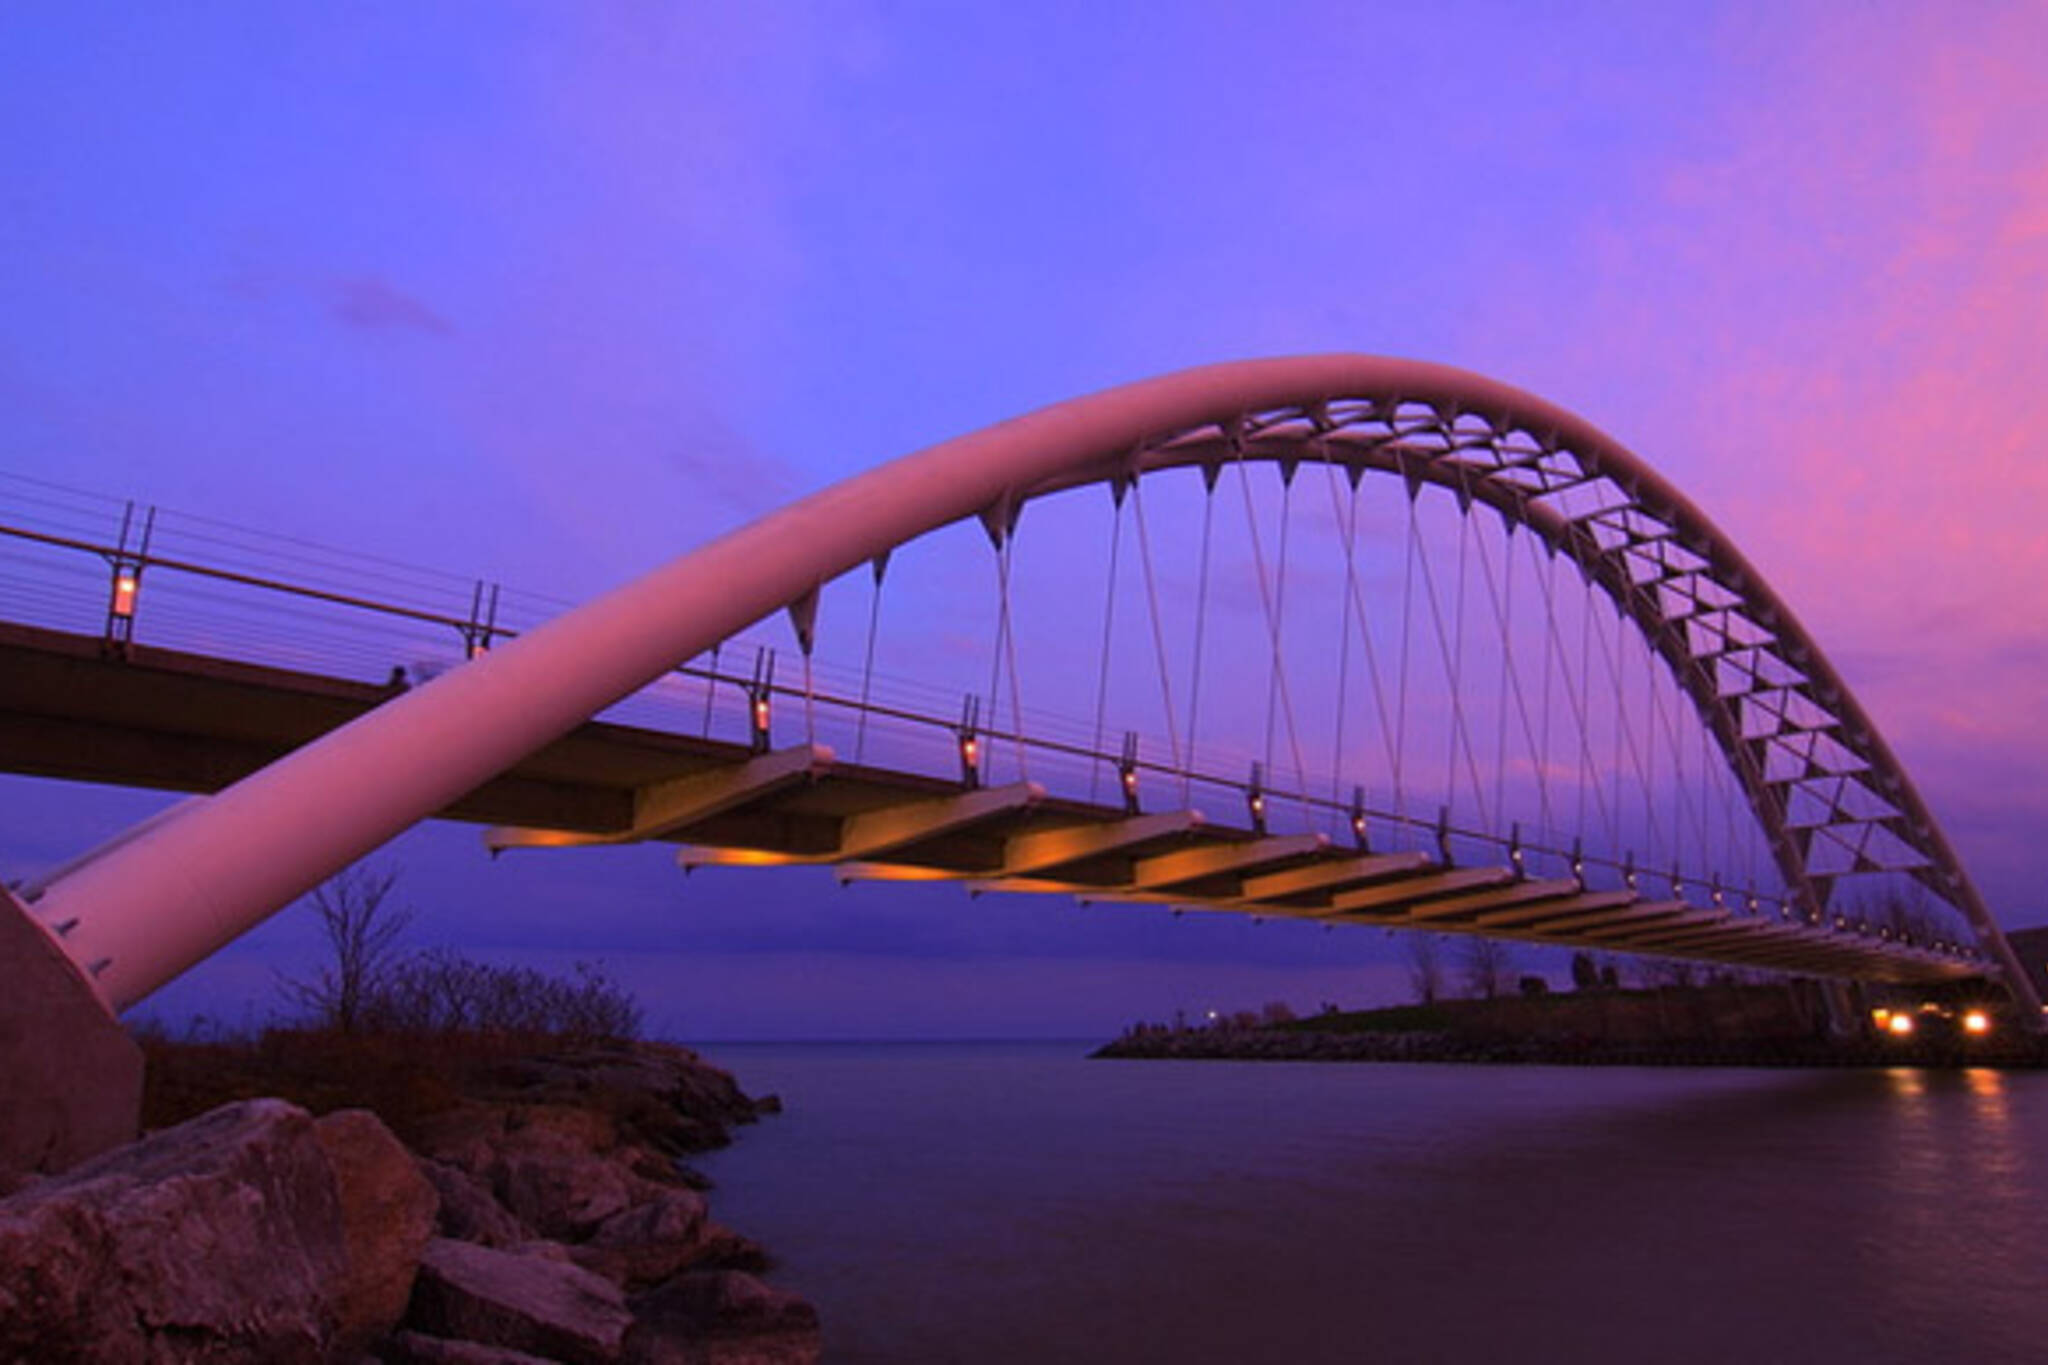 Toronto Humber Bridge